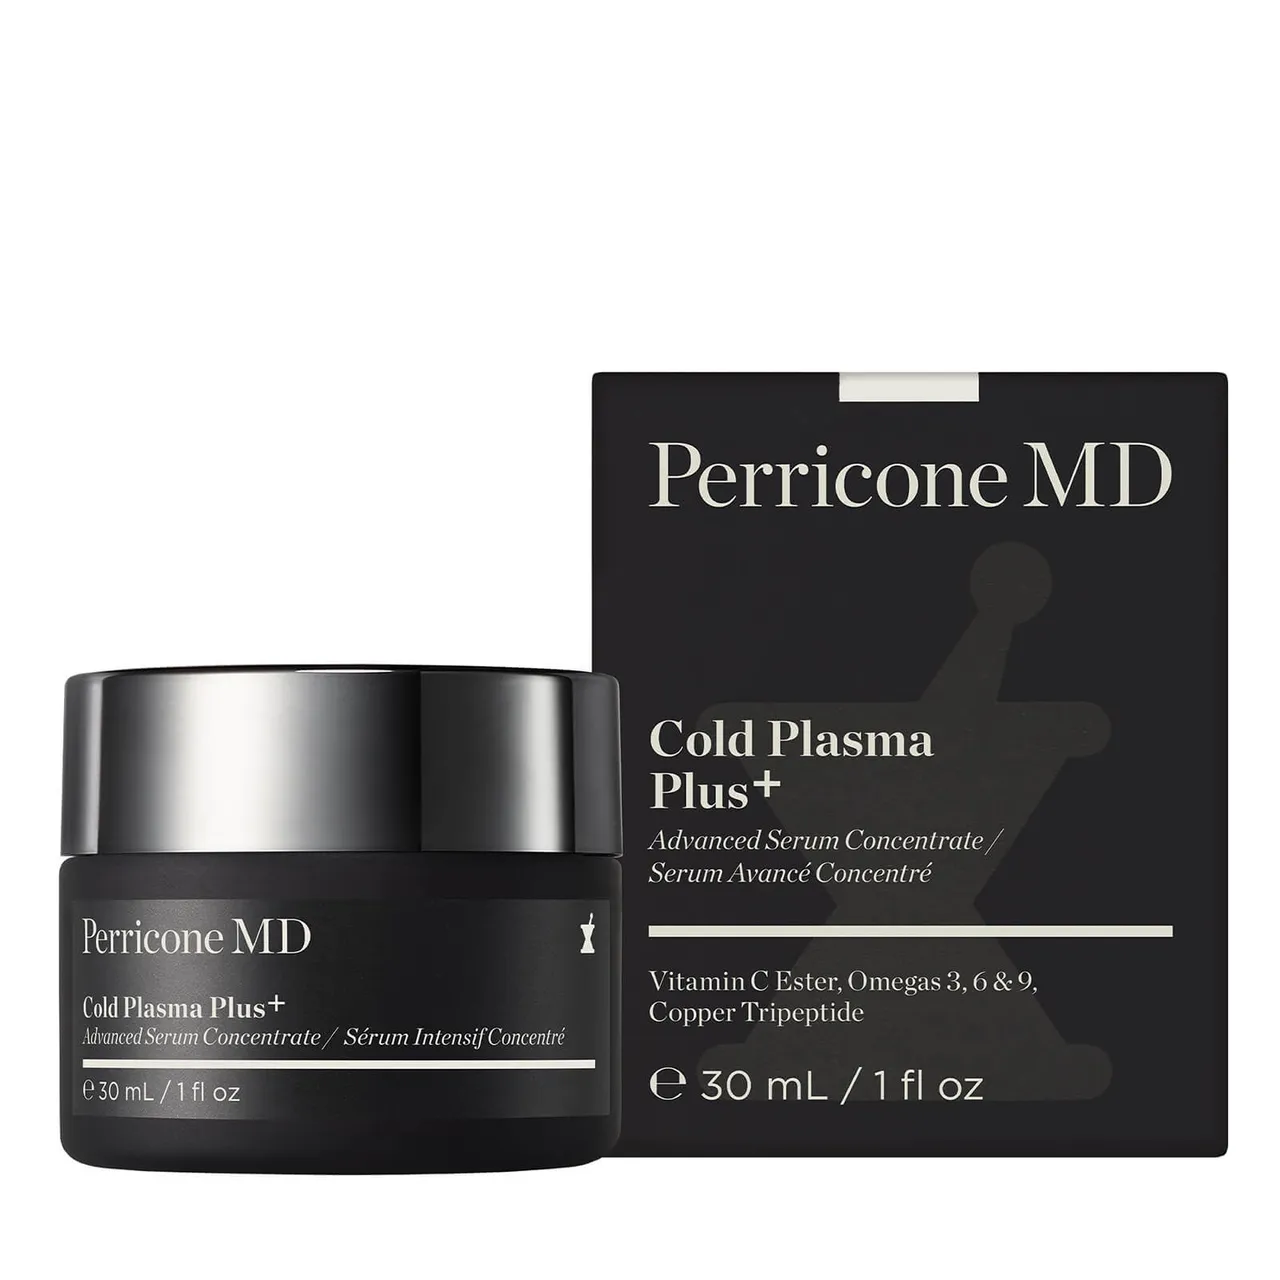 Perricone MD Cold Plasma Plus+ Advanced Serum Concentrate 30ml